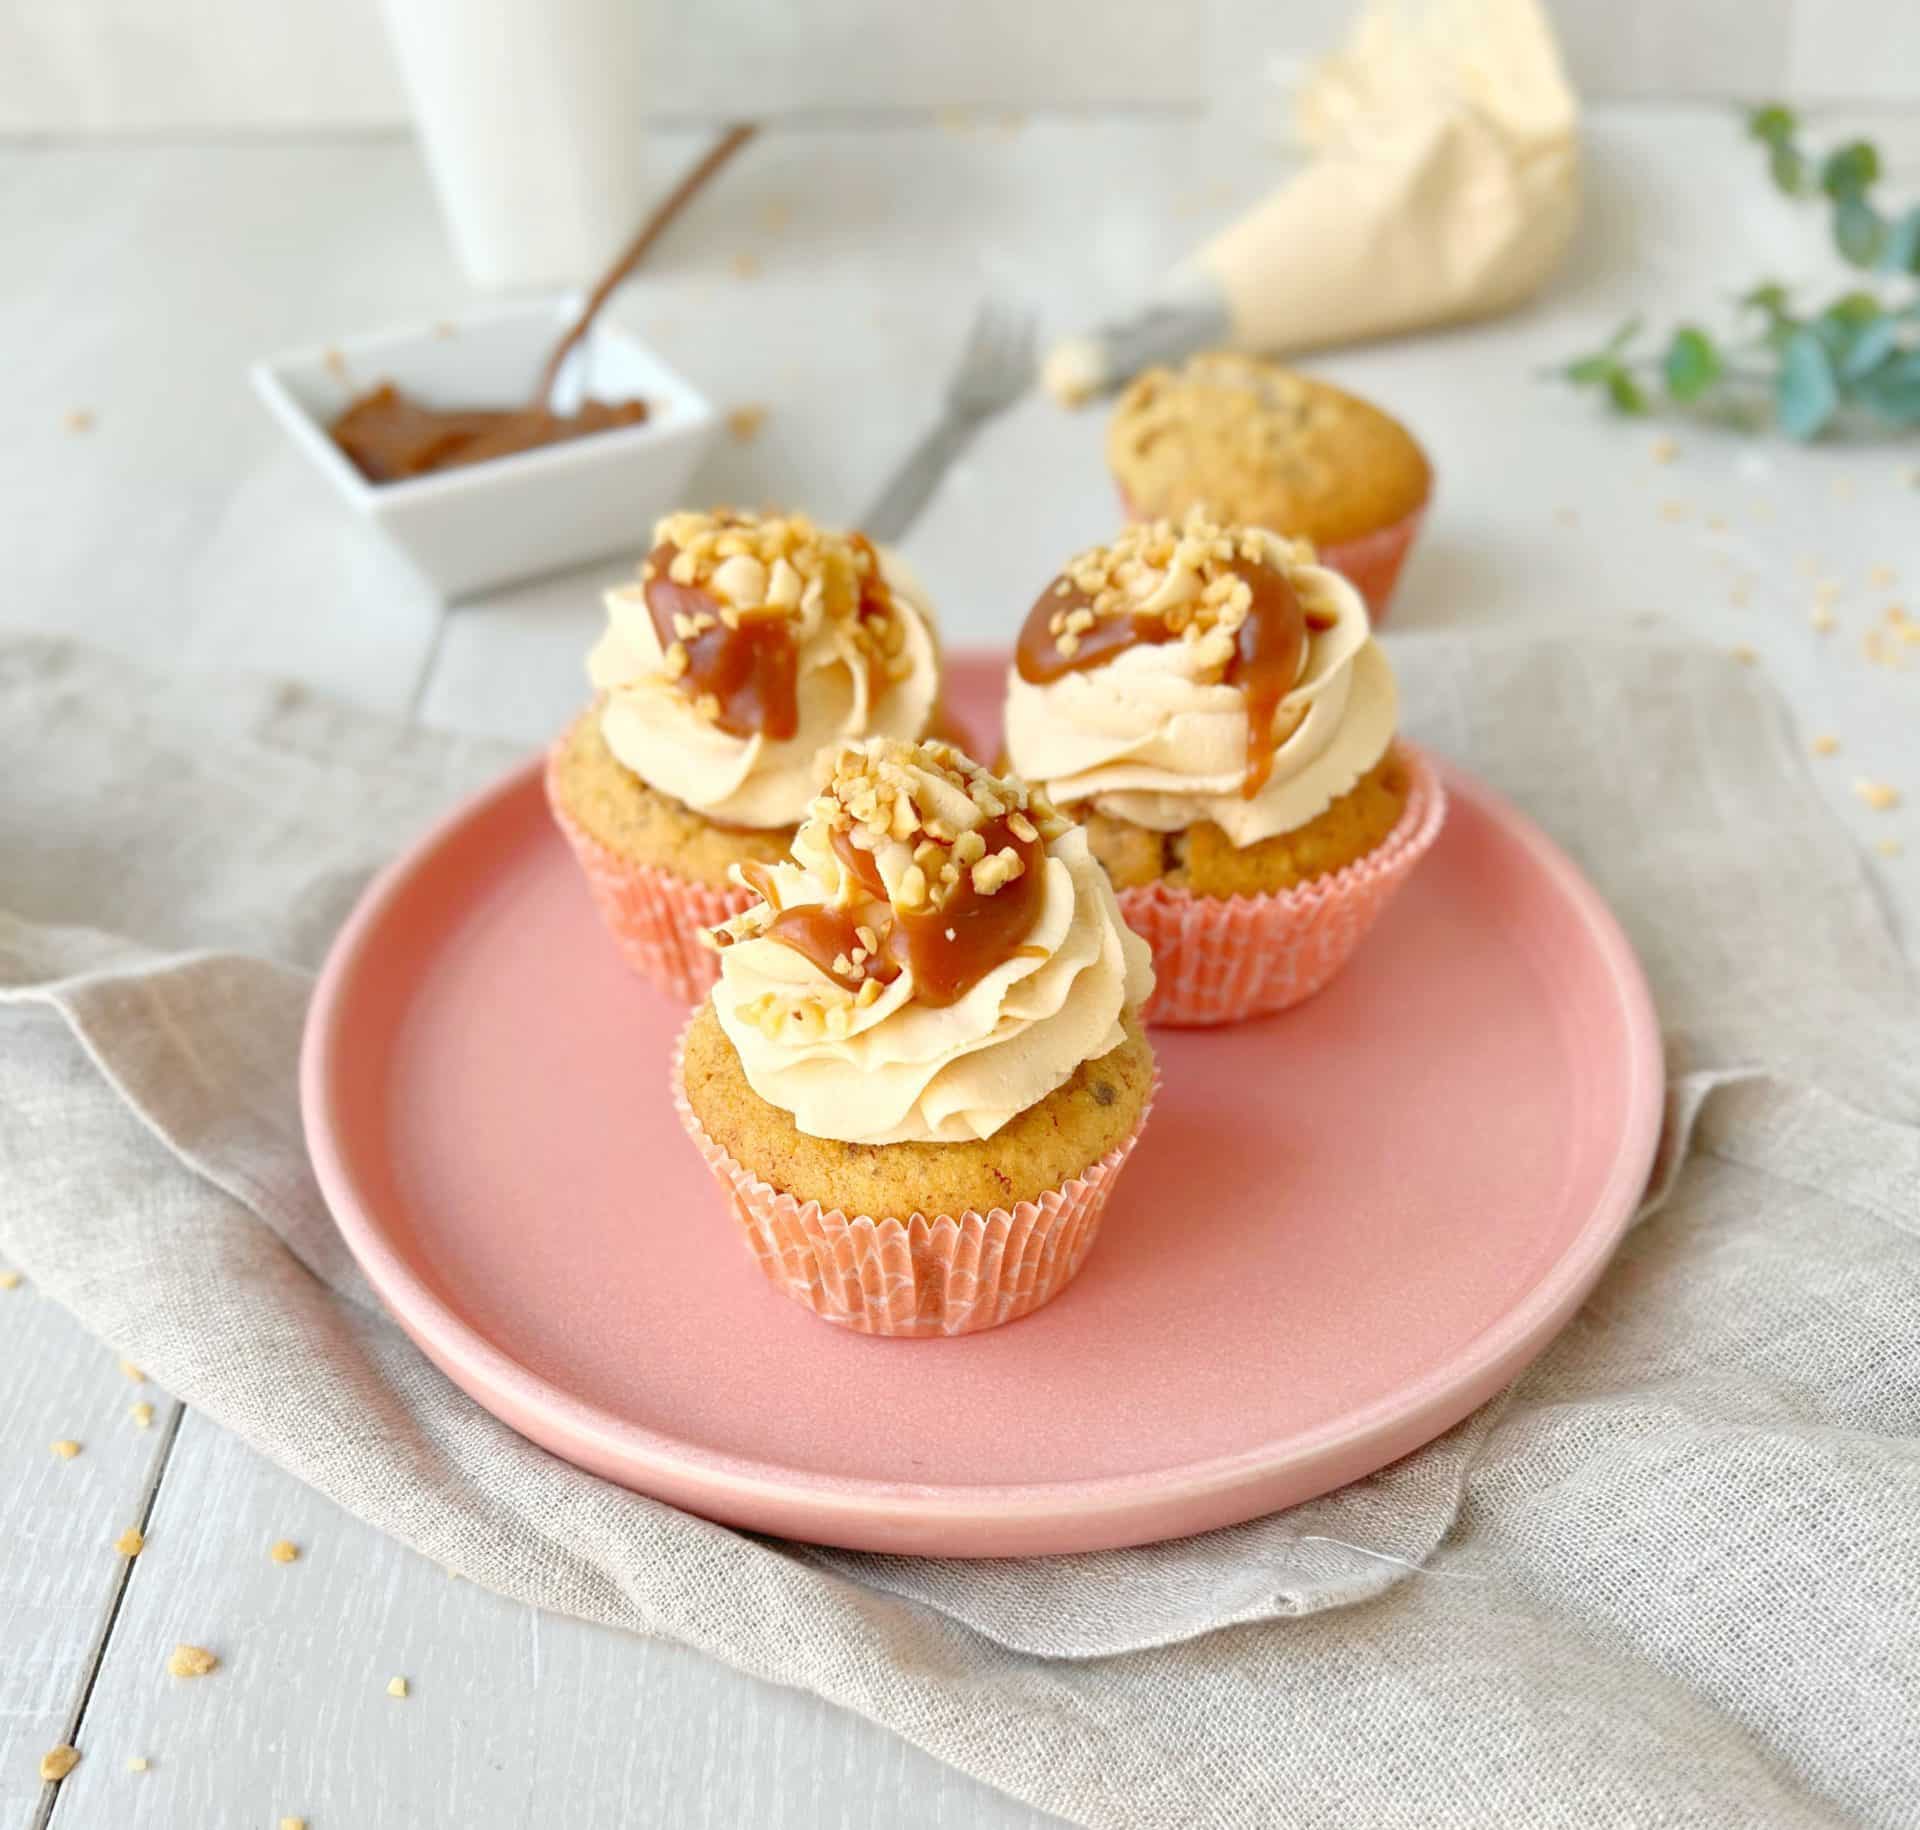 Nuss-Cupcakes mit süßem Karamellfrosting! - Sheepysbakery